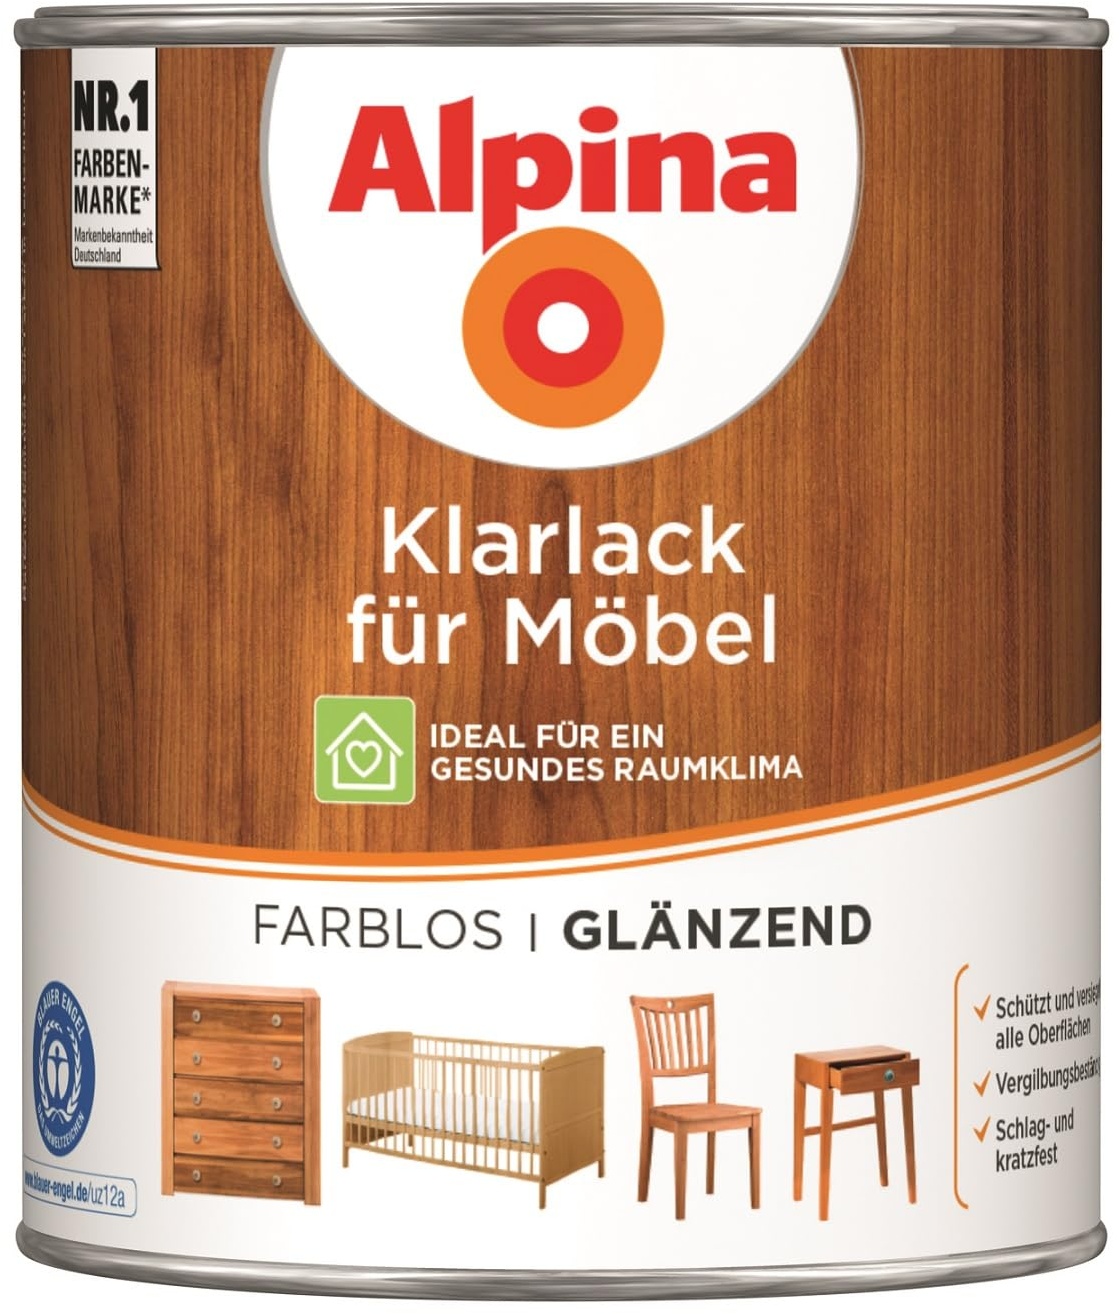 Alpina Klarlack für Möbel 750ml glänzend